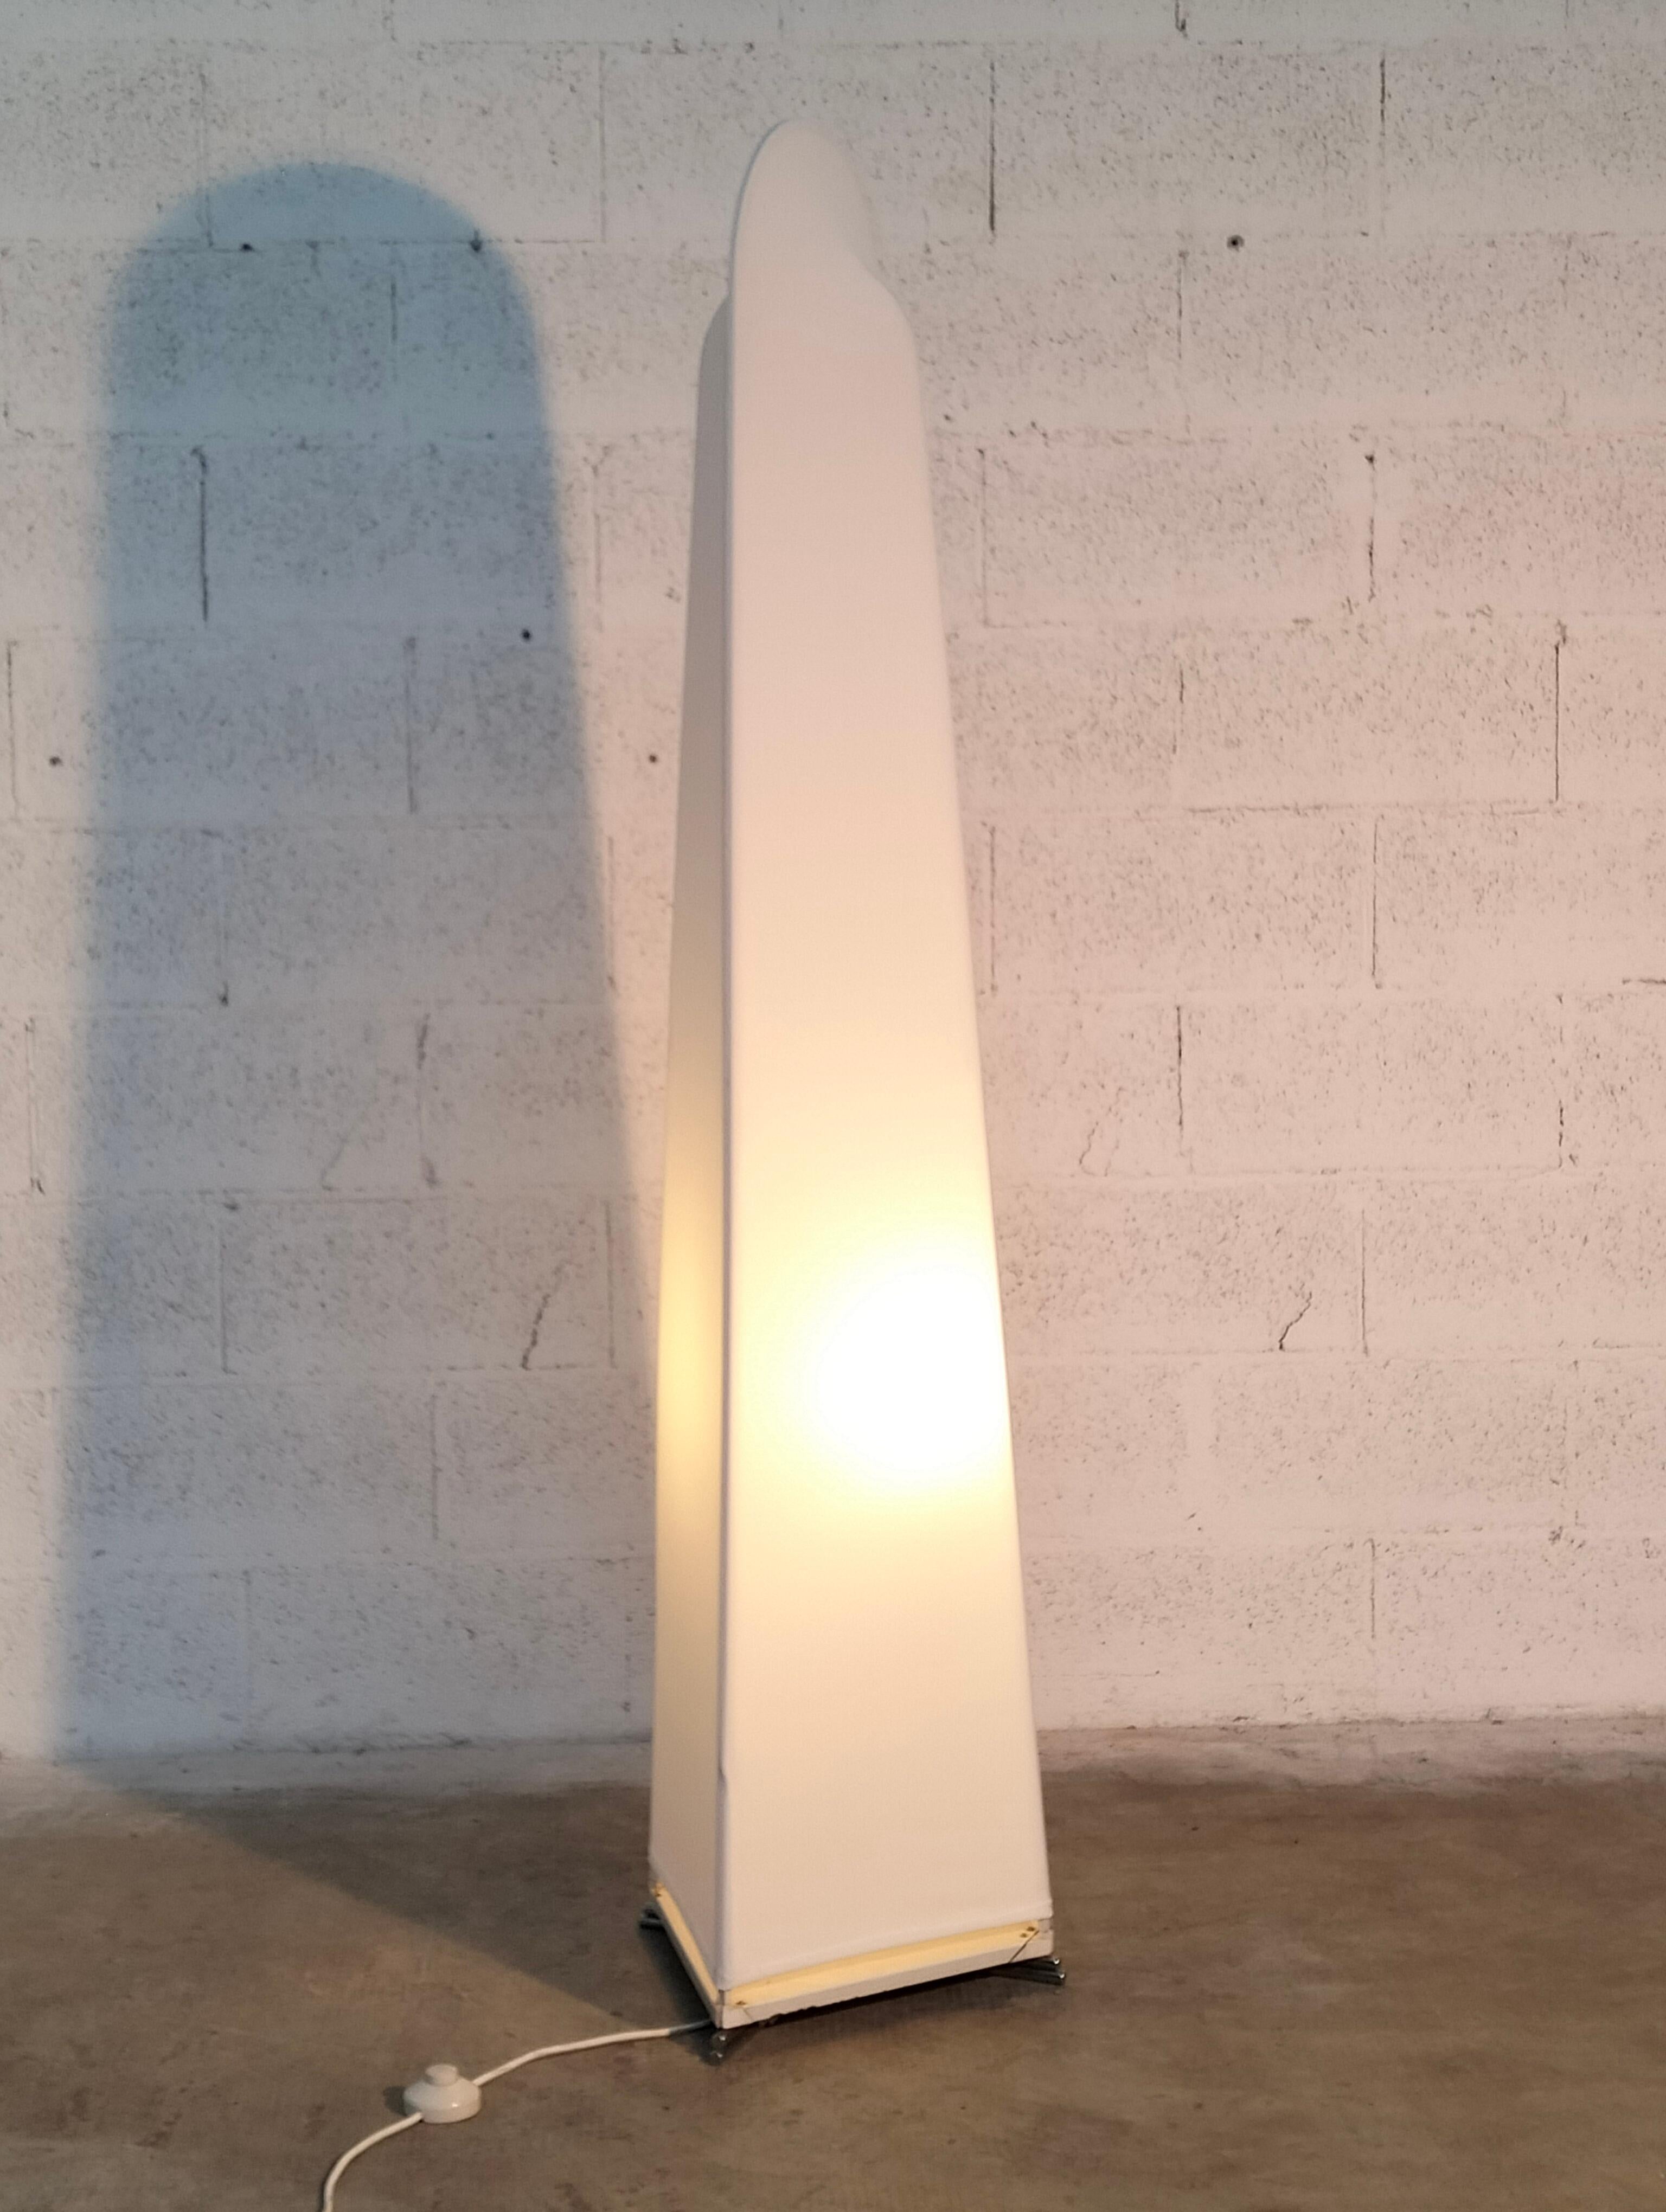 Kazuki floor lamp by Kazuhide Takahama for Sirrah, 1980s 
Metal structure, white fabric diffuser, ground support in chromed steel rod. 
Ethereal presence fully representing Takahama's lightness design.

Takahama, born in 1930, he studied